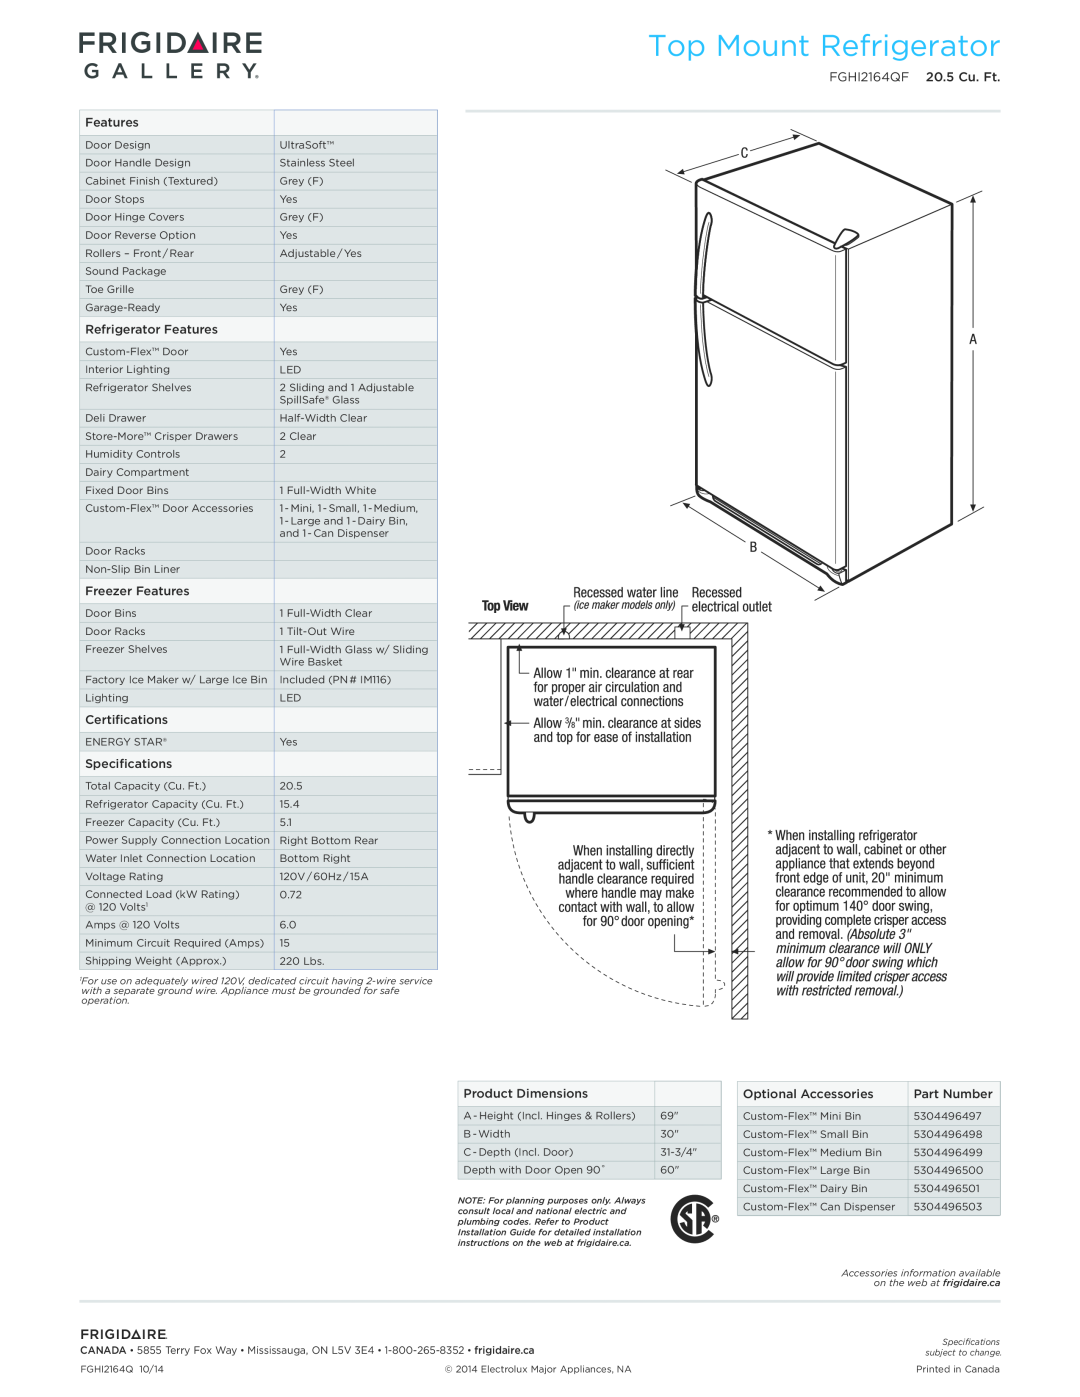 Frigidaire dimensions Top Mount Refrigerator, FGHI2164QF 20.5 Cu. Ft 